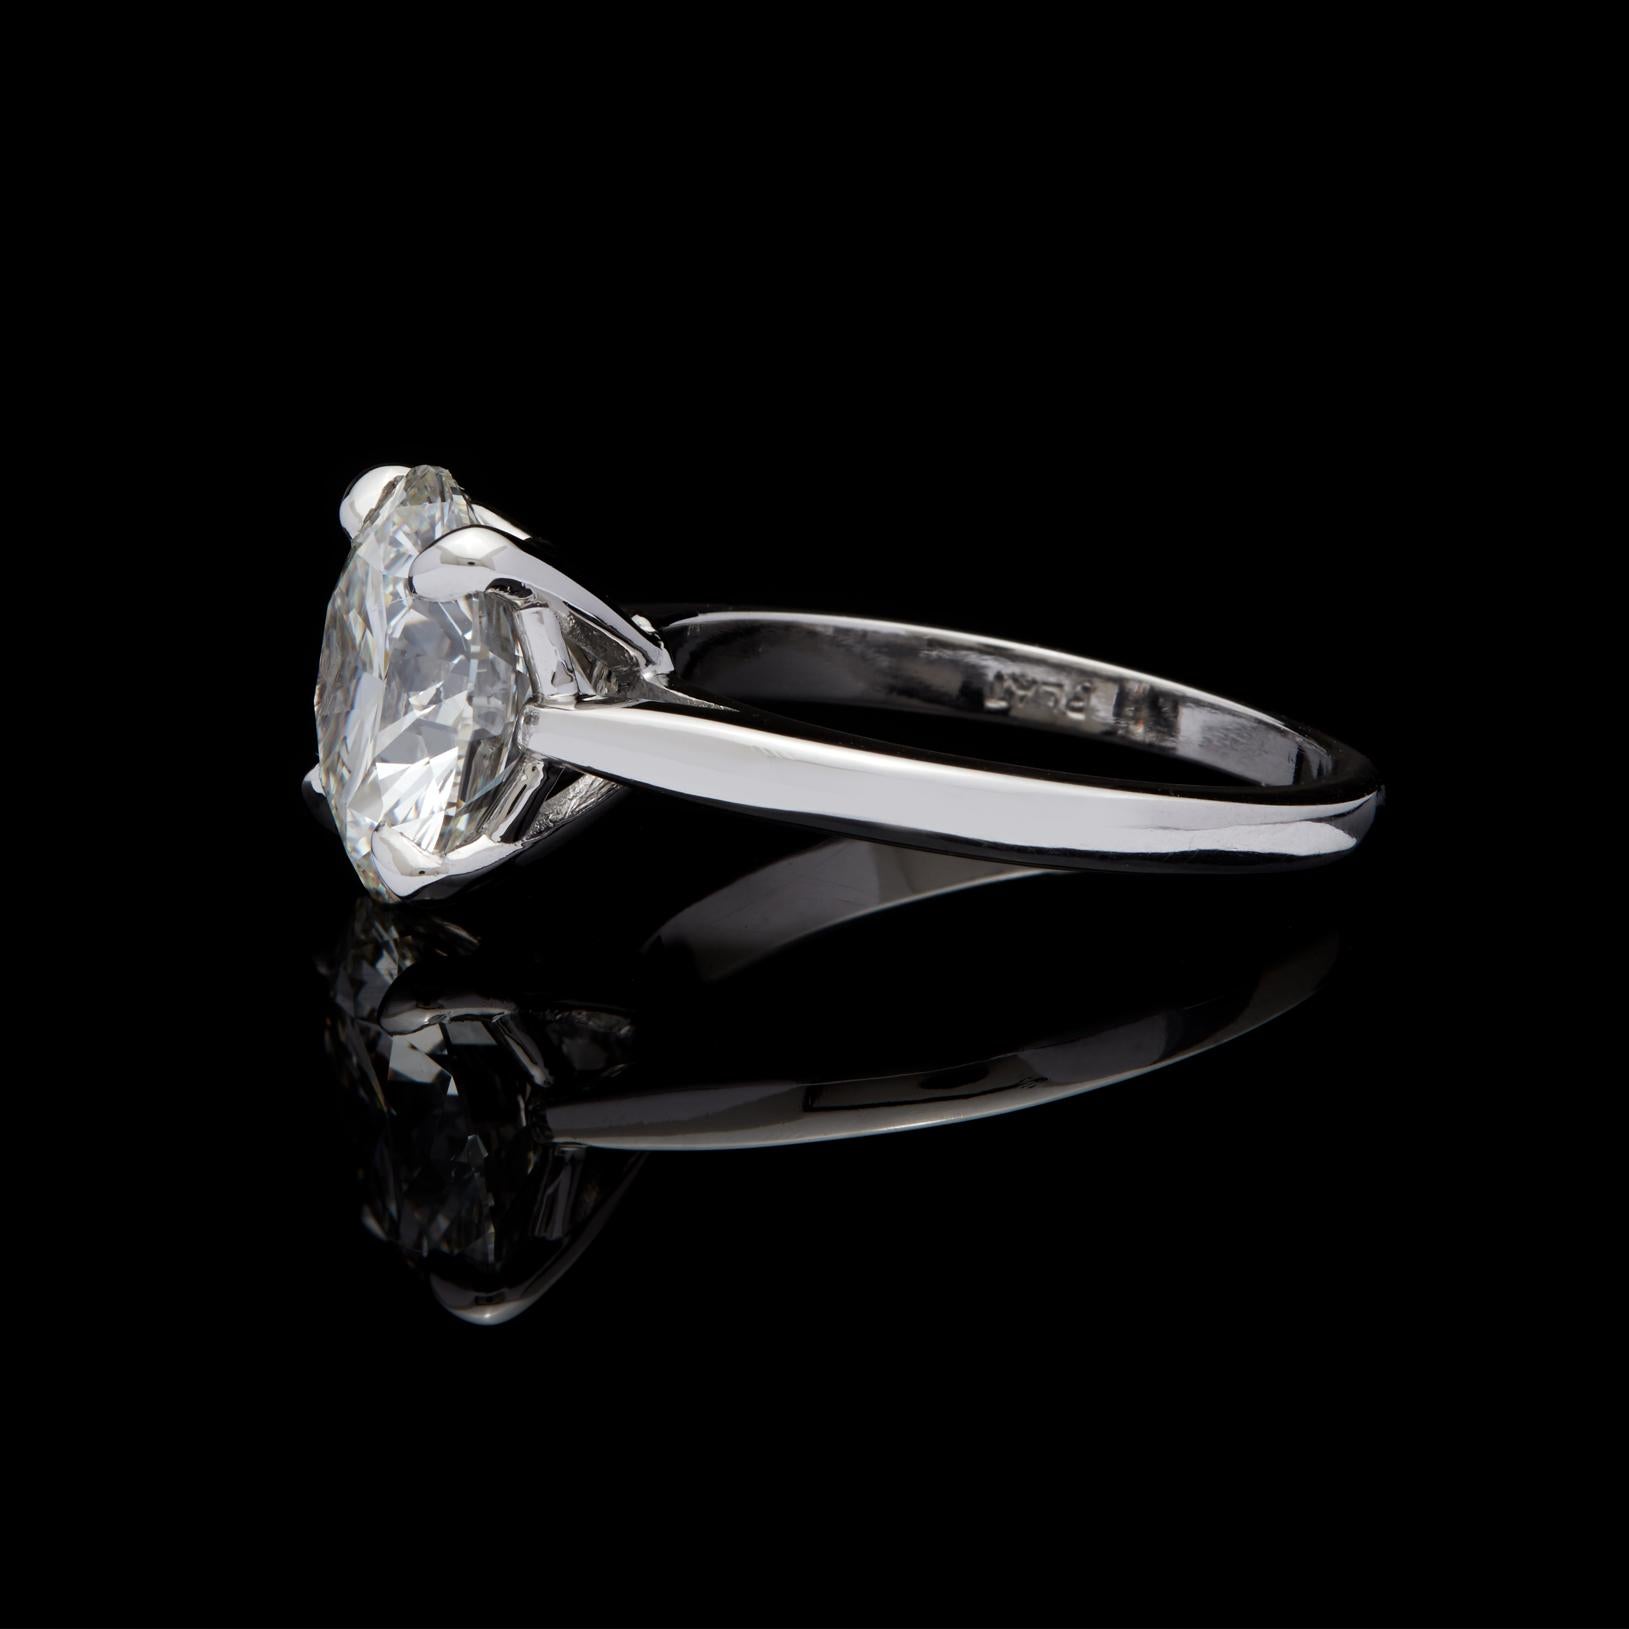 Round Cut Impressive GIA 4.07 Carat Diamond Engagement Ring For Sale